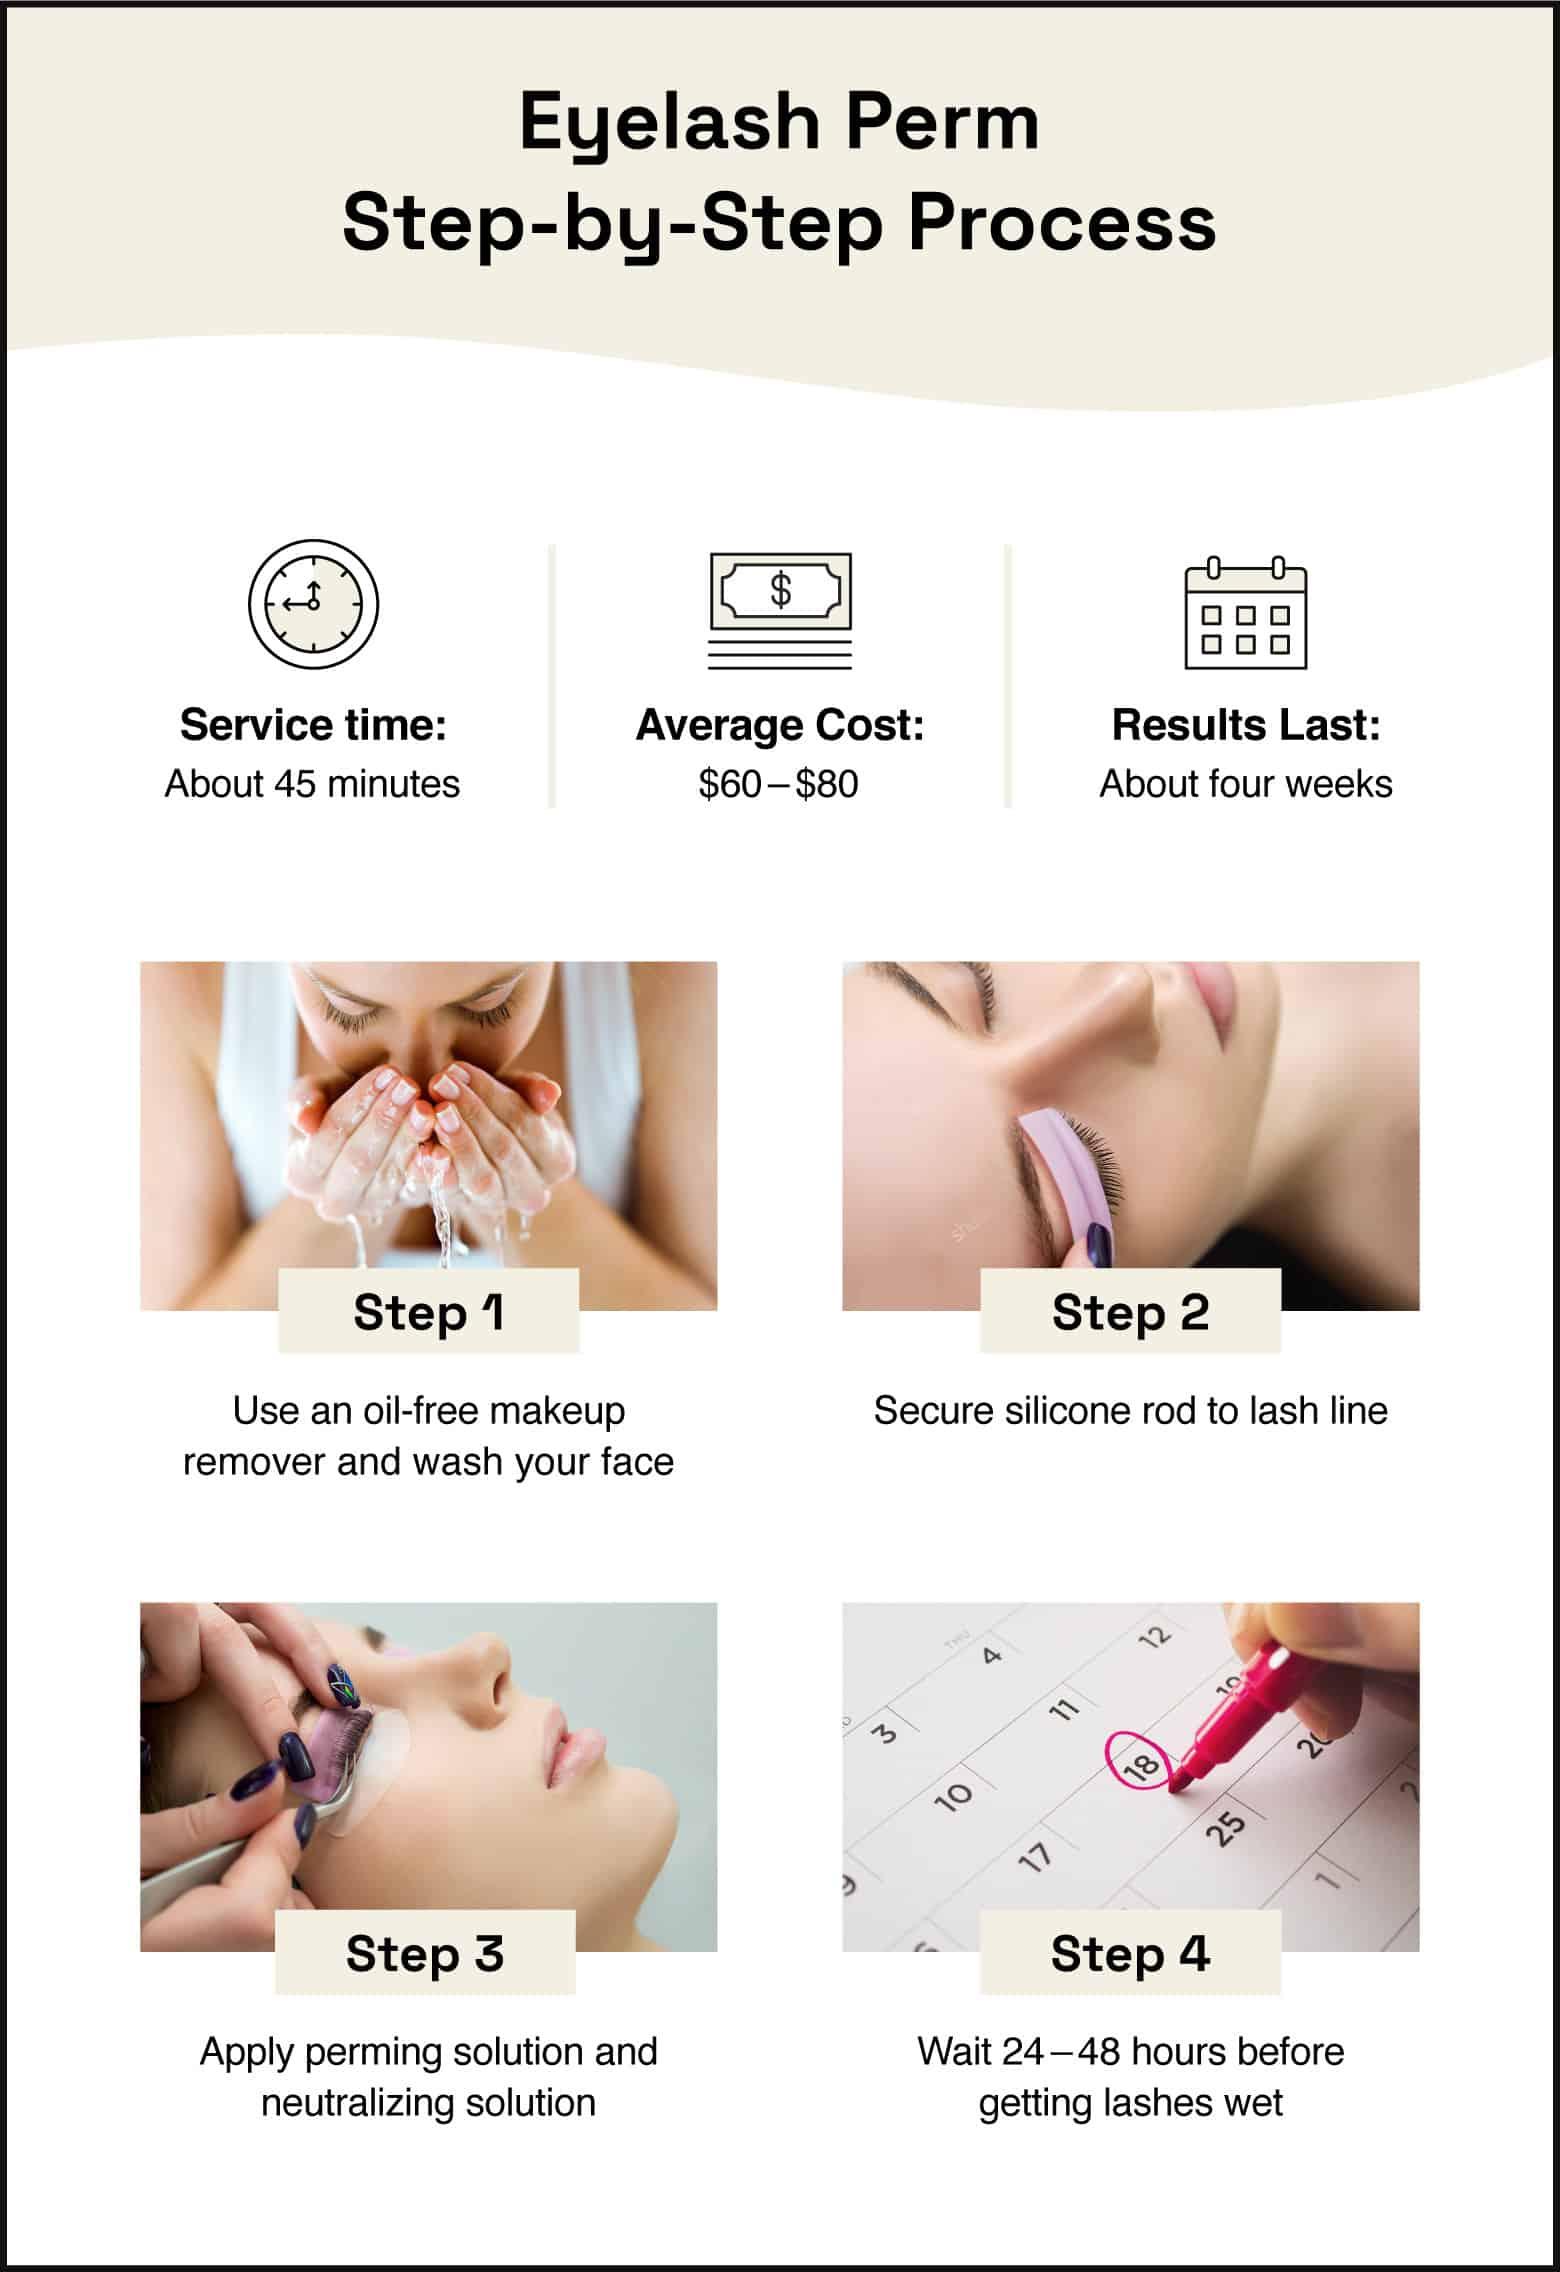 Eyelash Perm Step-by-Step Process